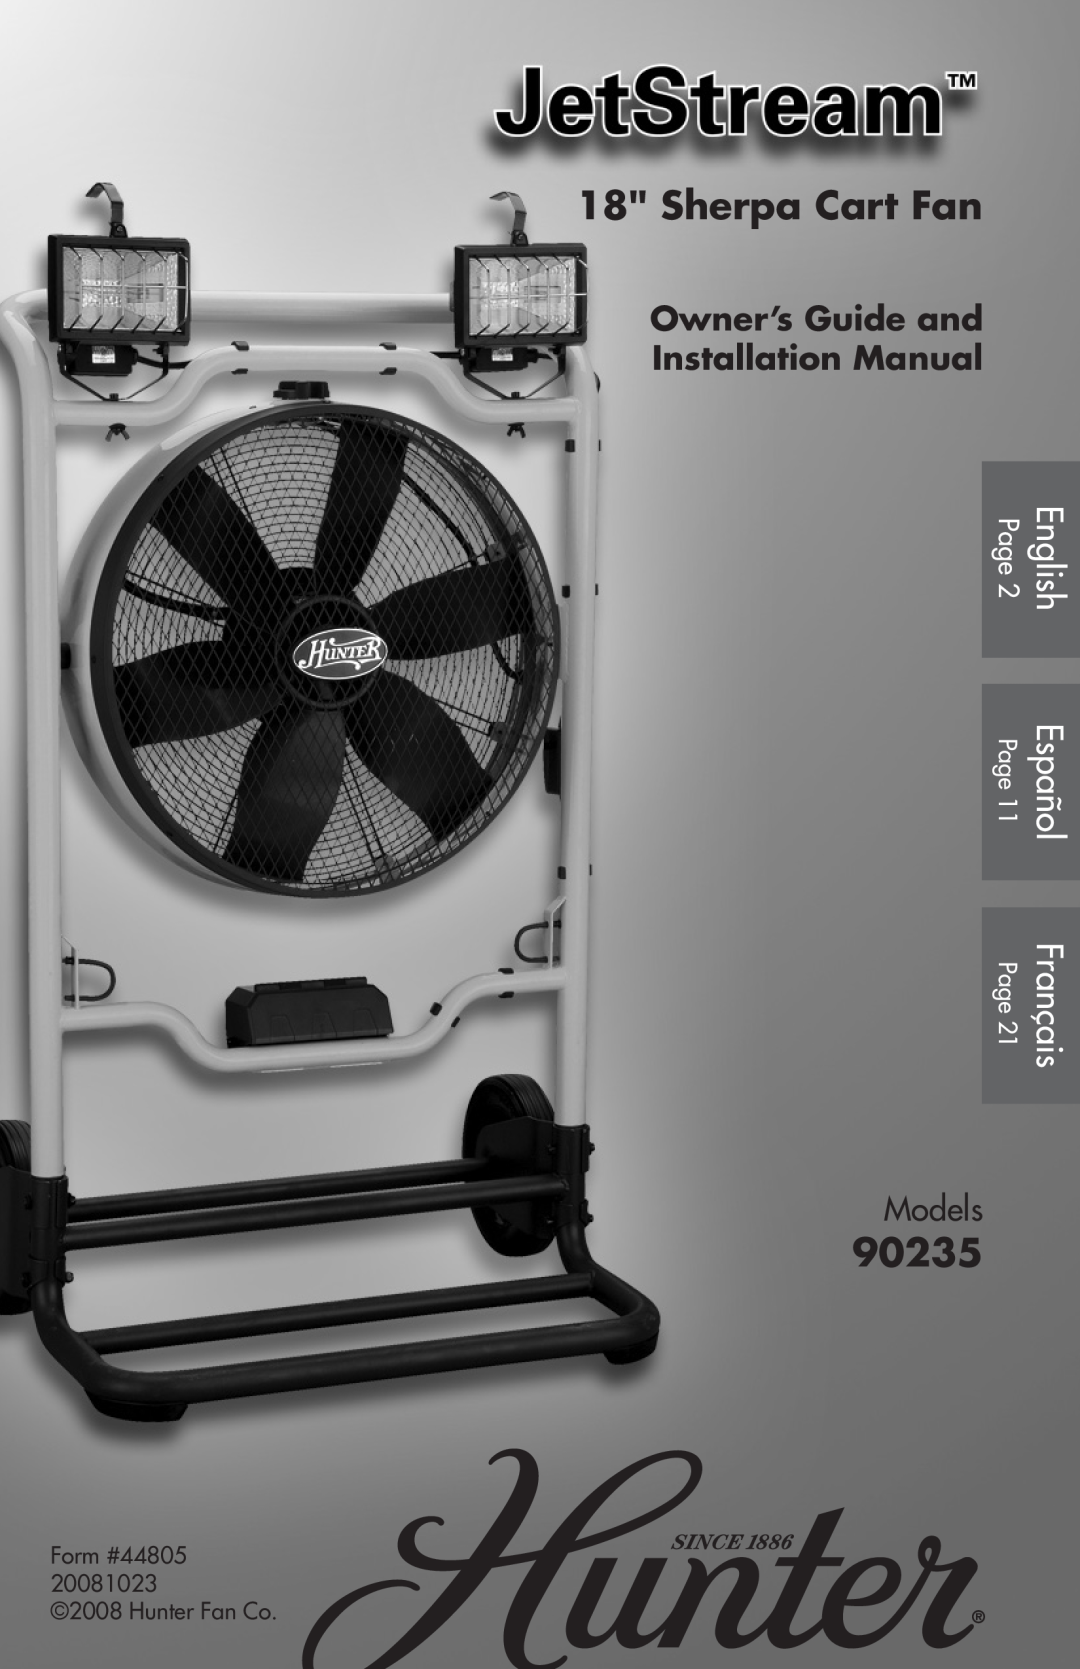 Hunter Fan 90235 installation manual Owner’s Guide and Installation Manual, Sherpa Cart Fan, English, Models, Español 